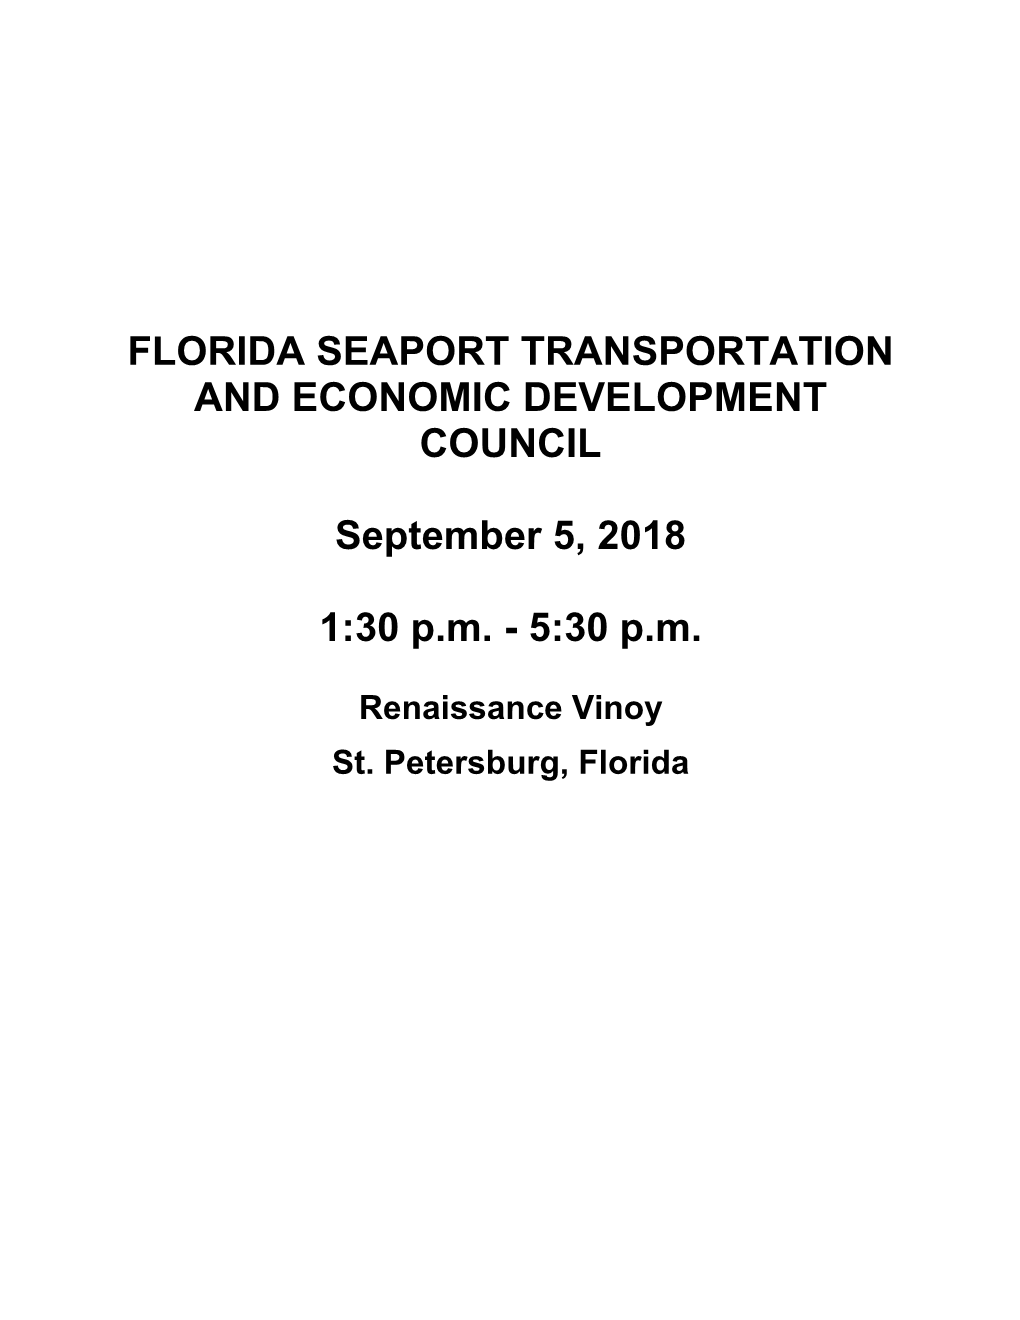 Florida Seaport Transportation and Economic Development Council